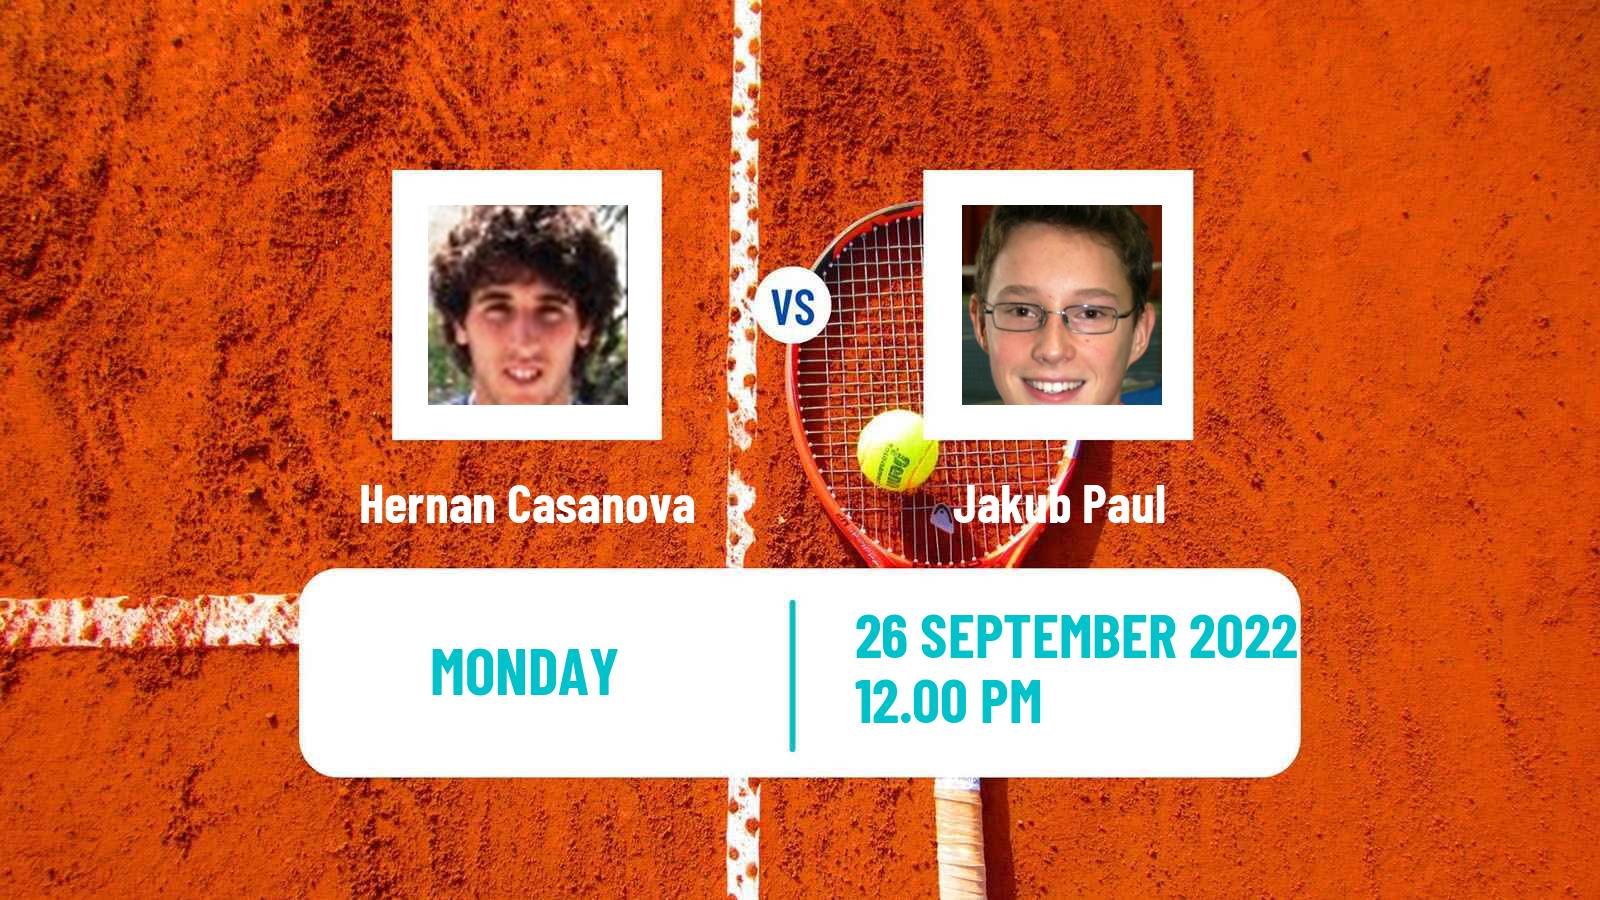 Tennis ATP Challenger Hernan Casanova - Jakub Paul